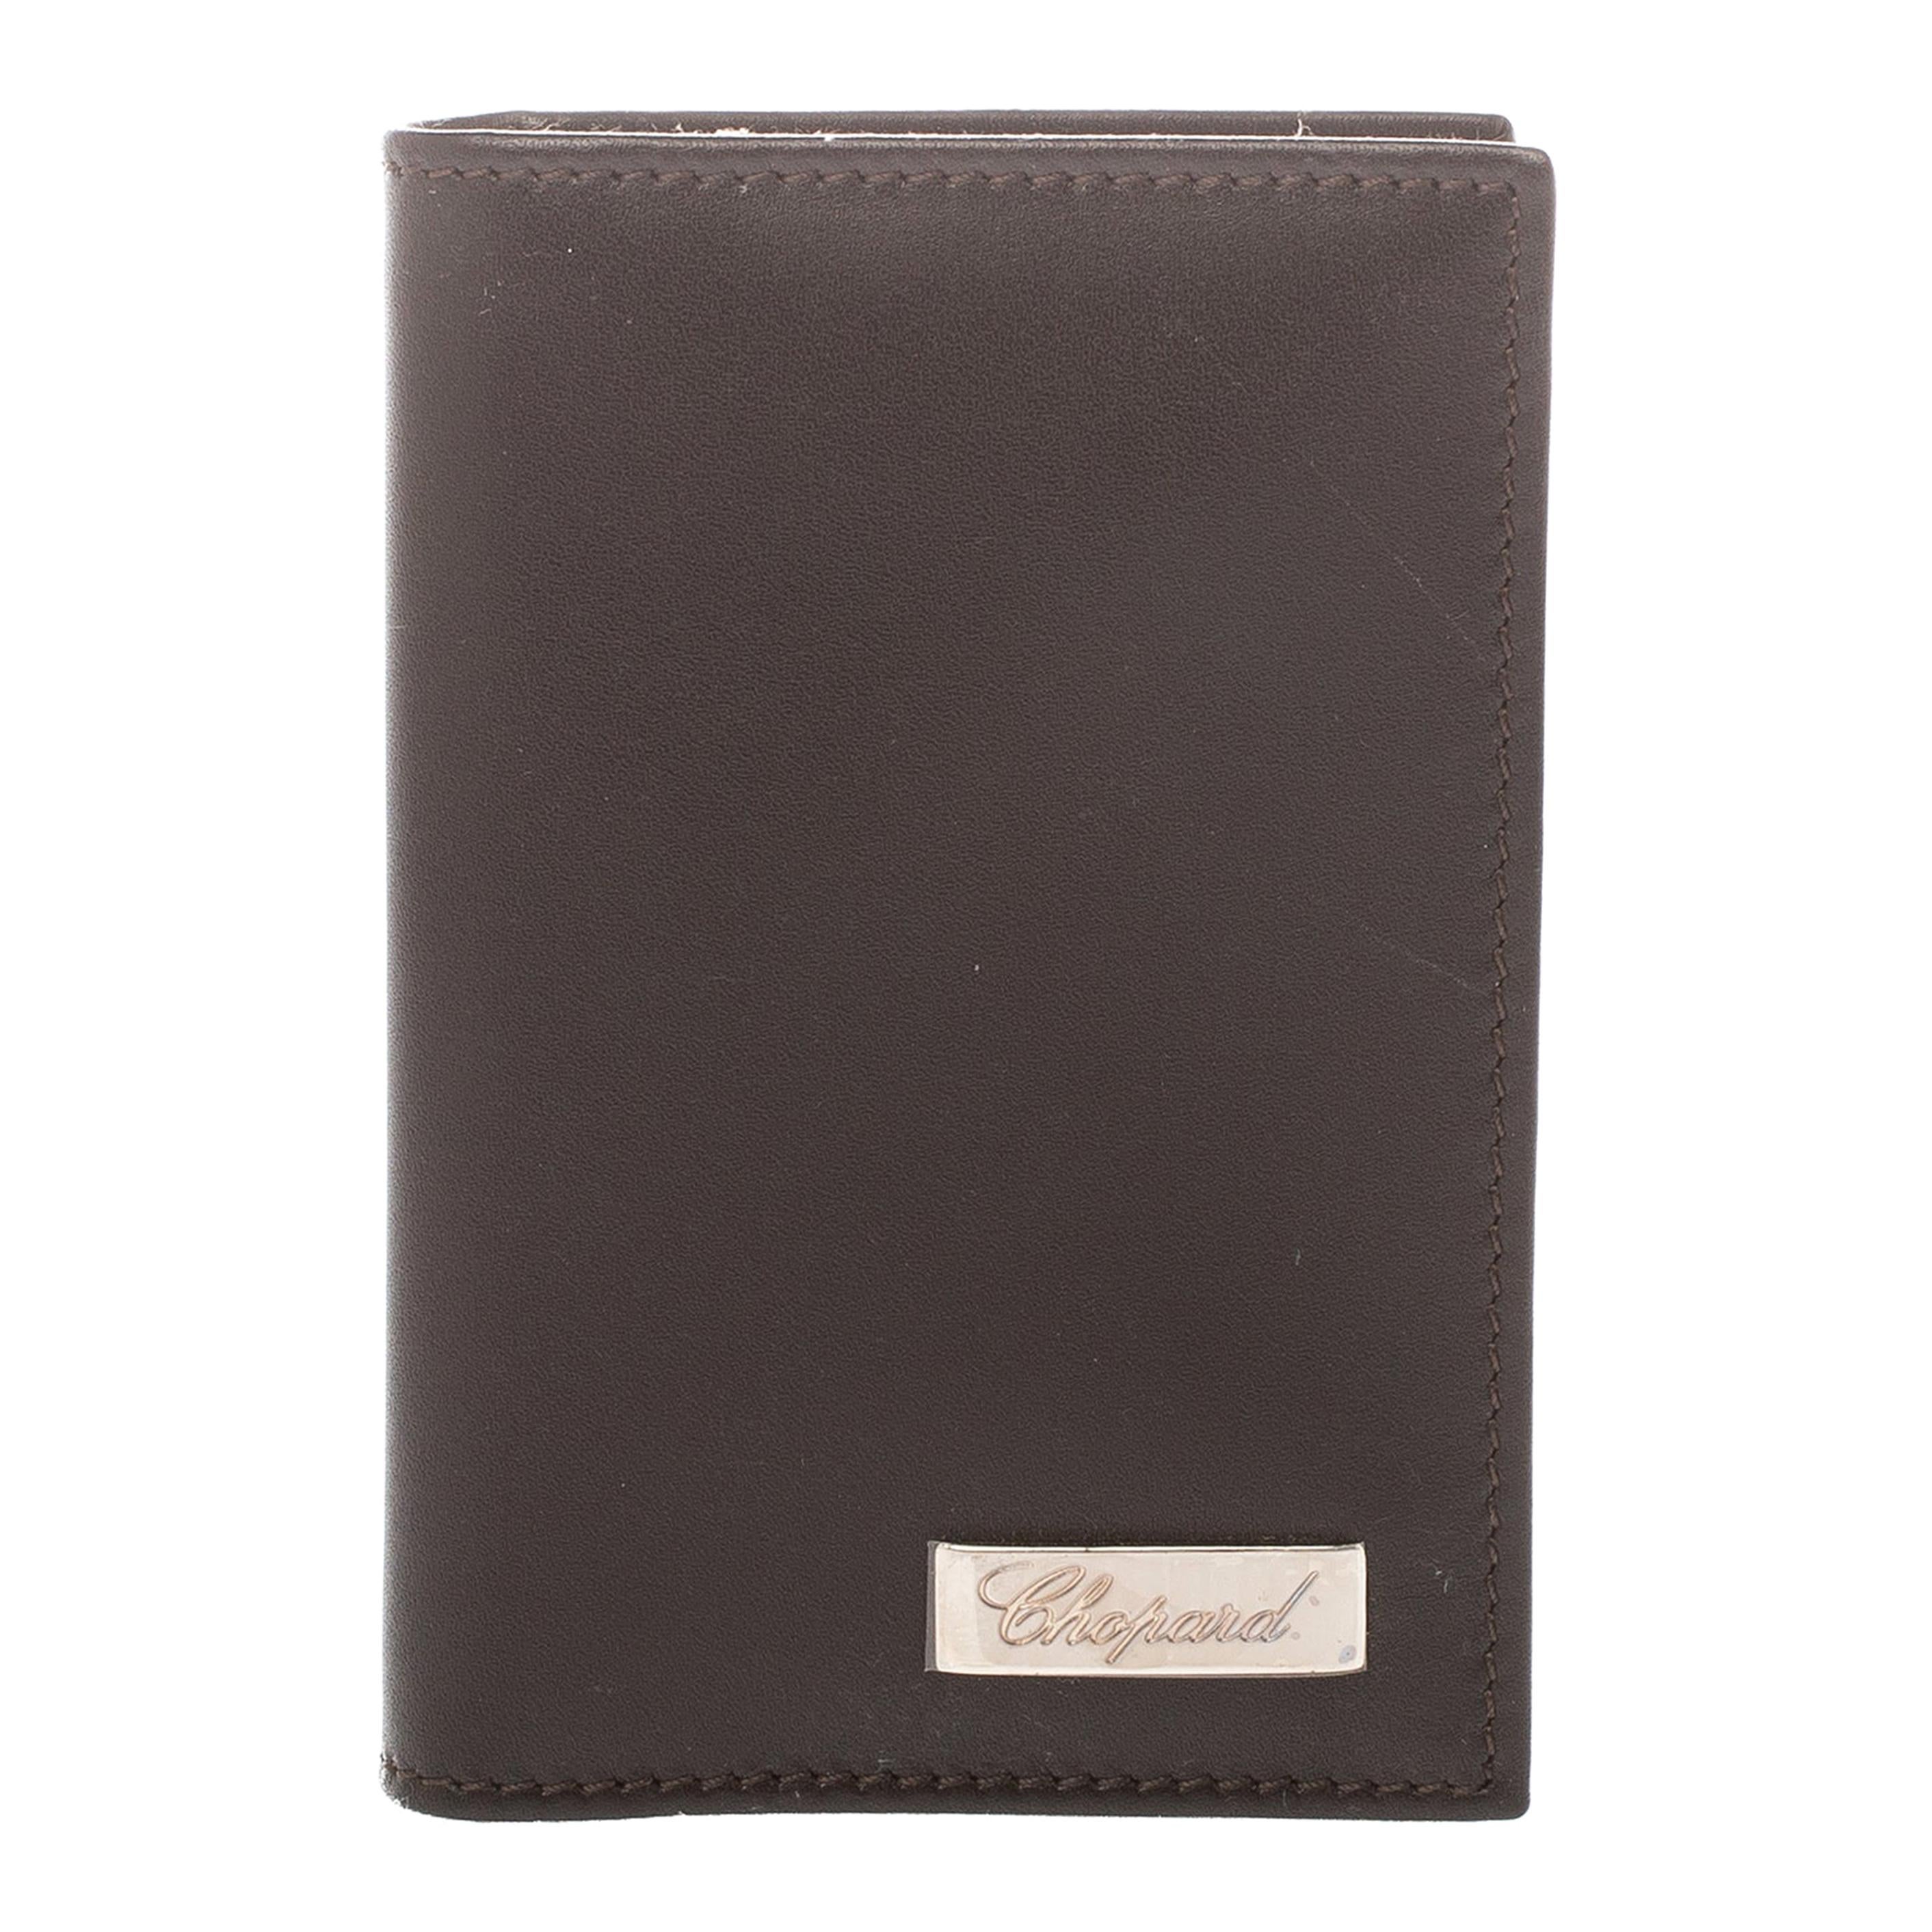 Chophard Dark Brown Leather Classic Bifold Wallet